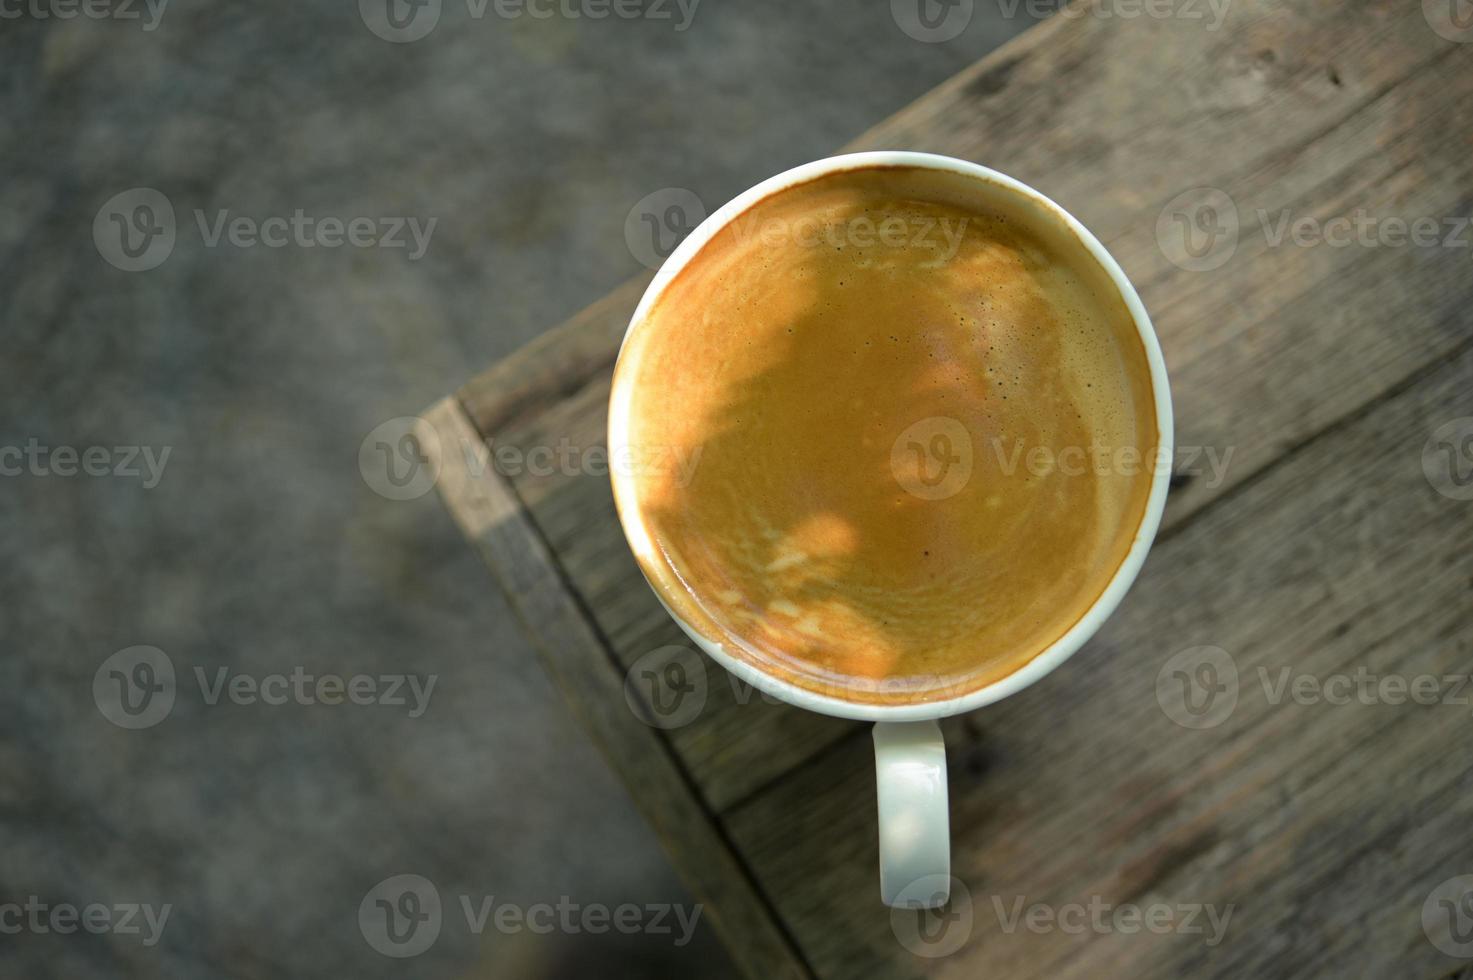 Hot coffee, americano coffee, caffeinated beverage, crema coffee, close-up shot. photo